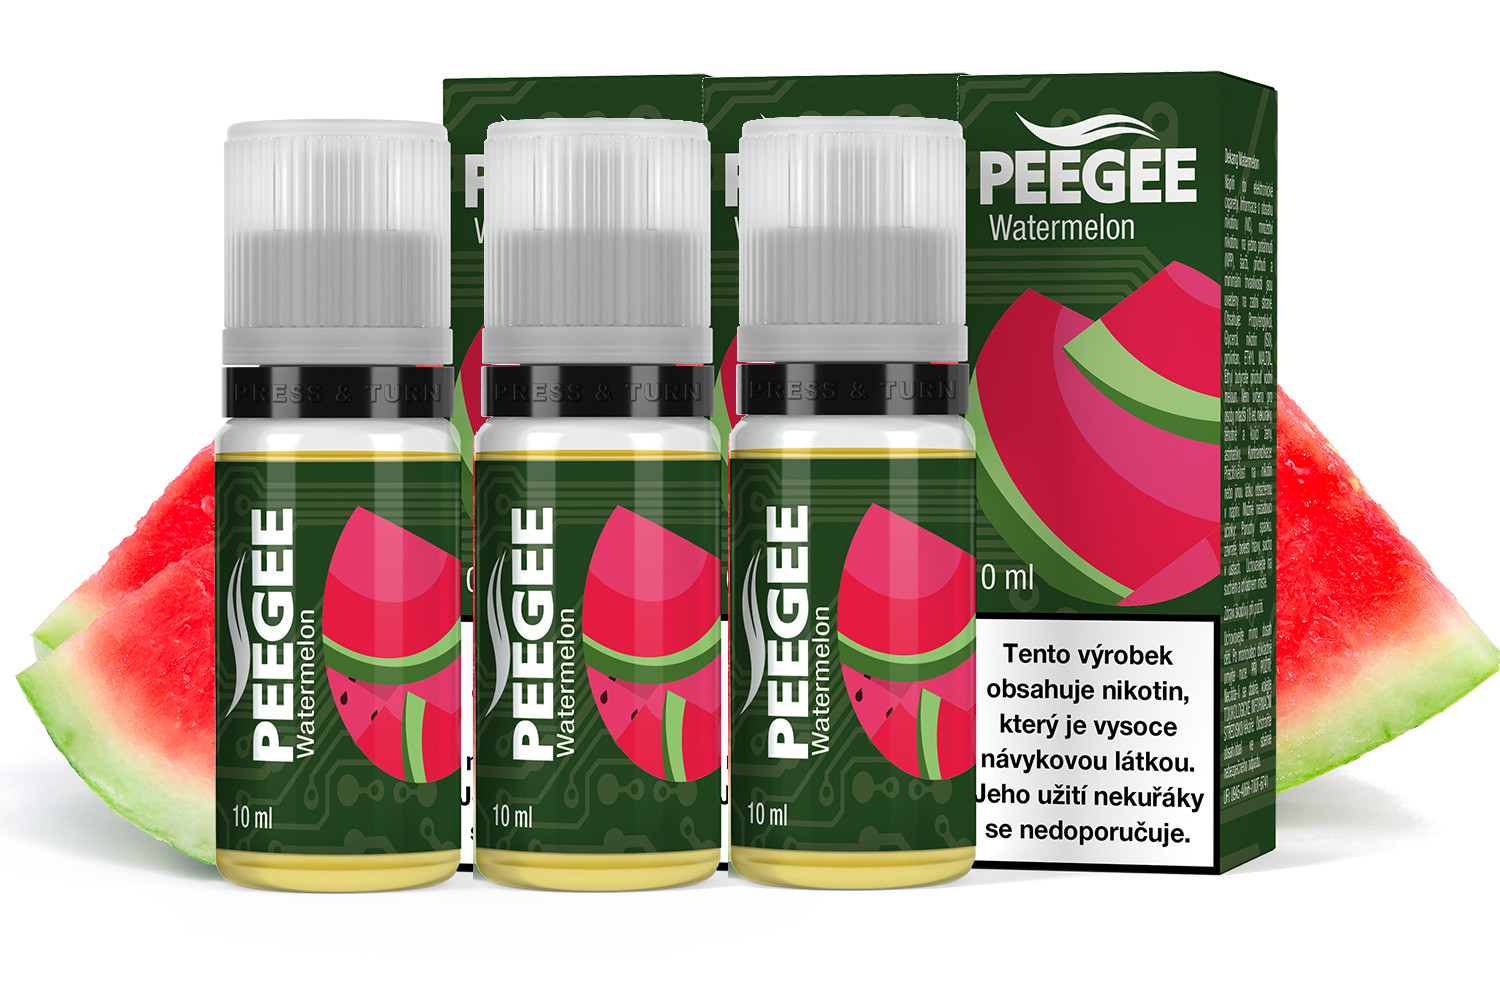 PEEGEE - Vodní meloun (Watermelon) 3x10ml Obsah nikotinu: 18mg